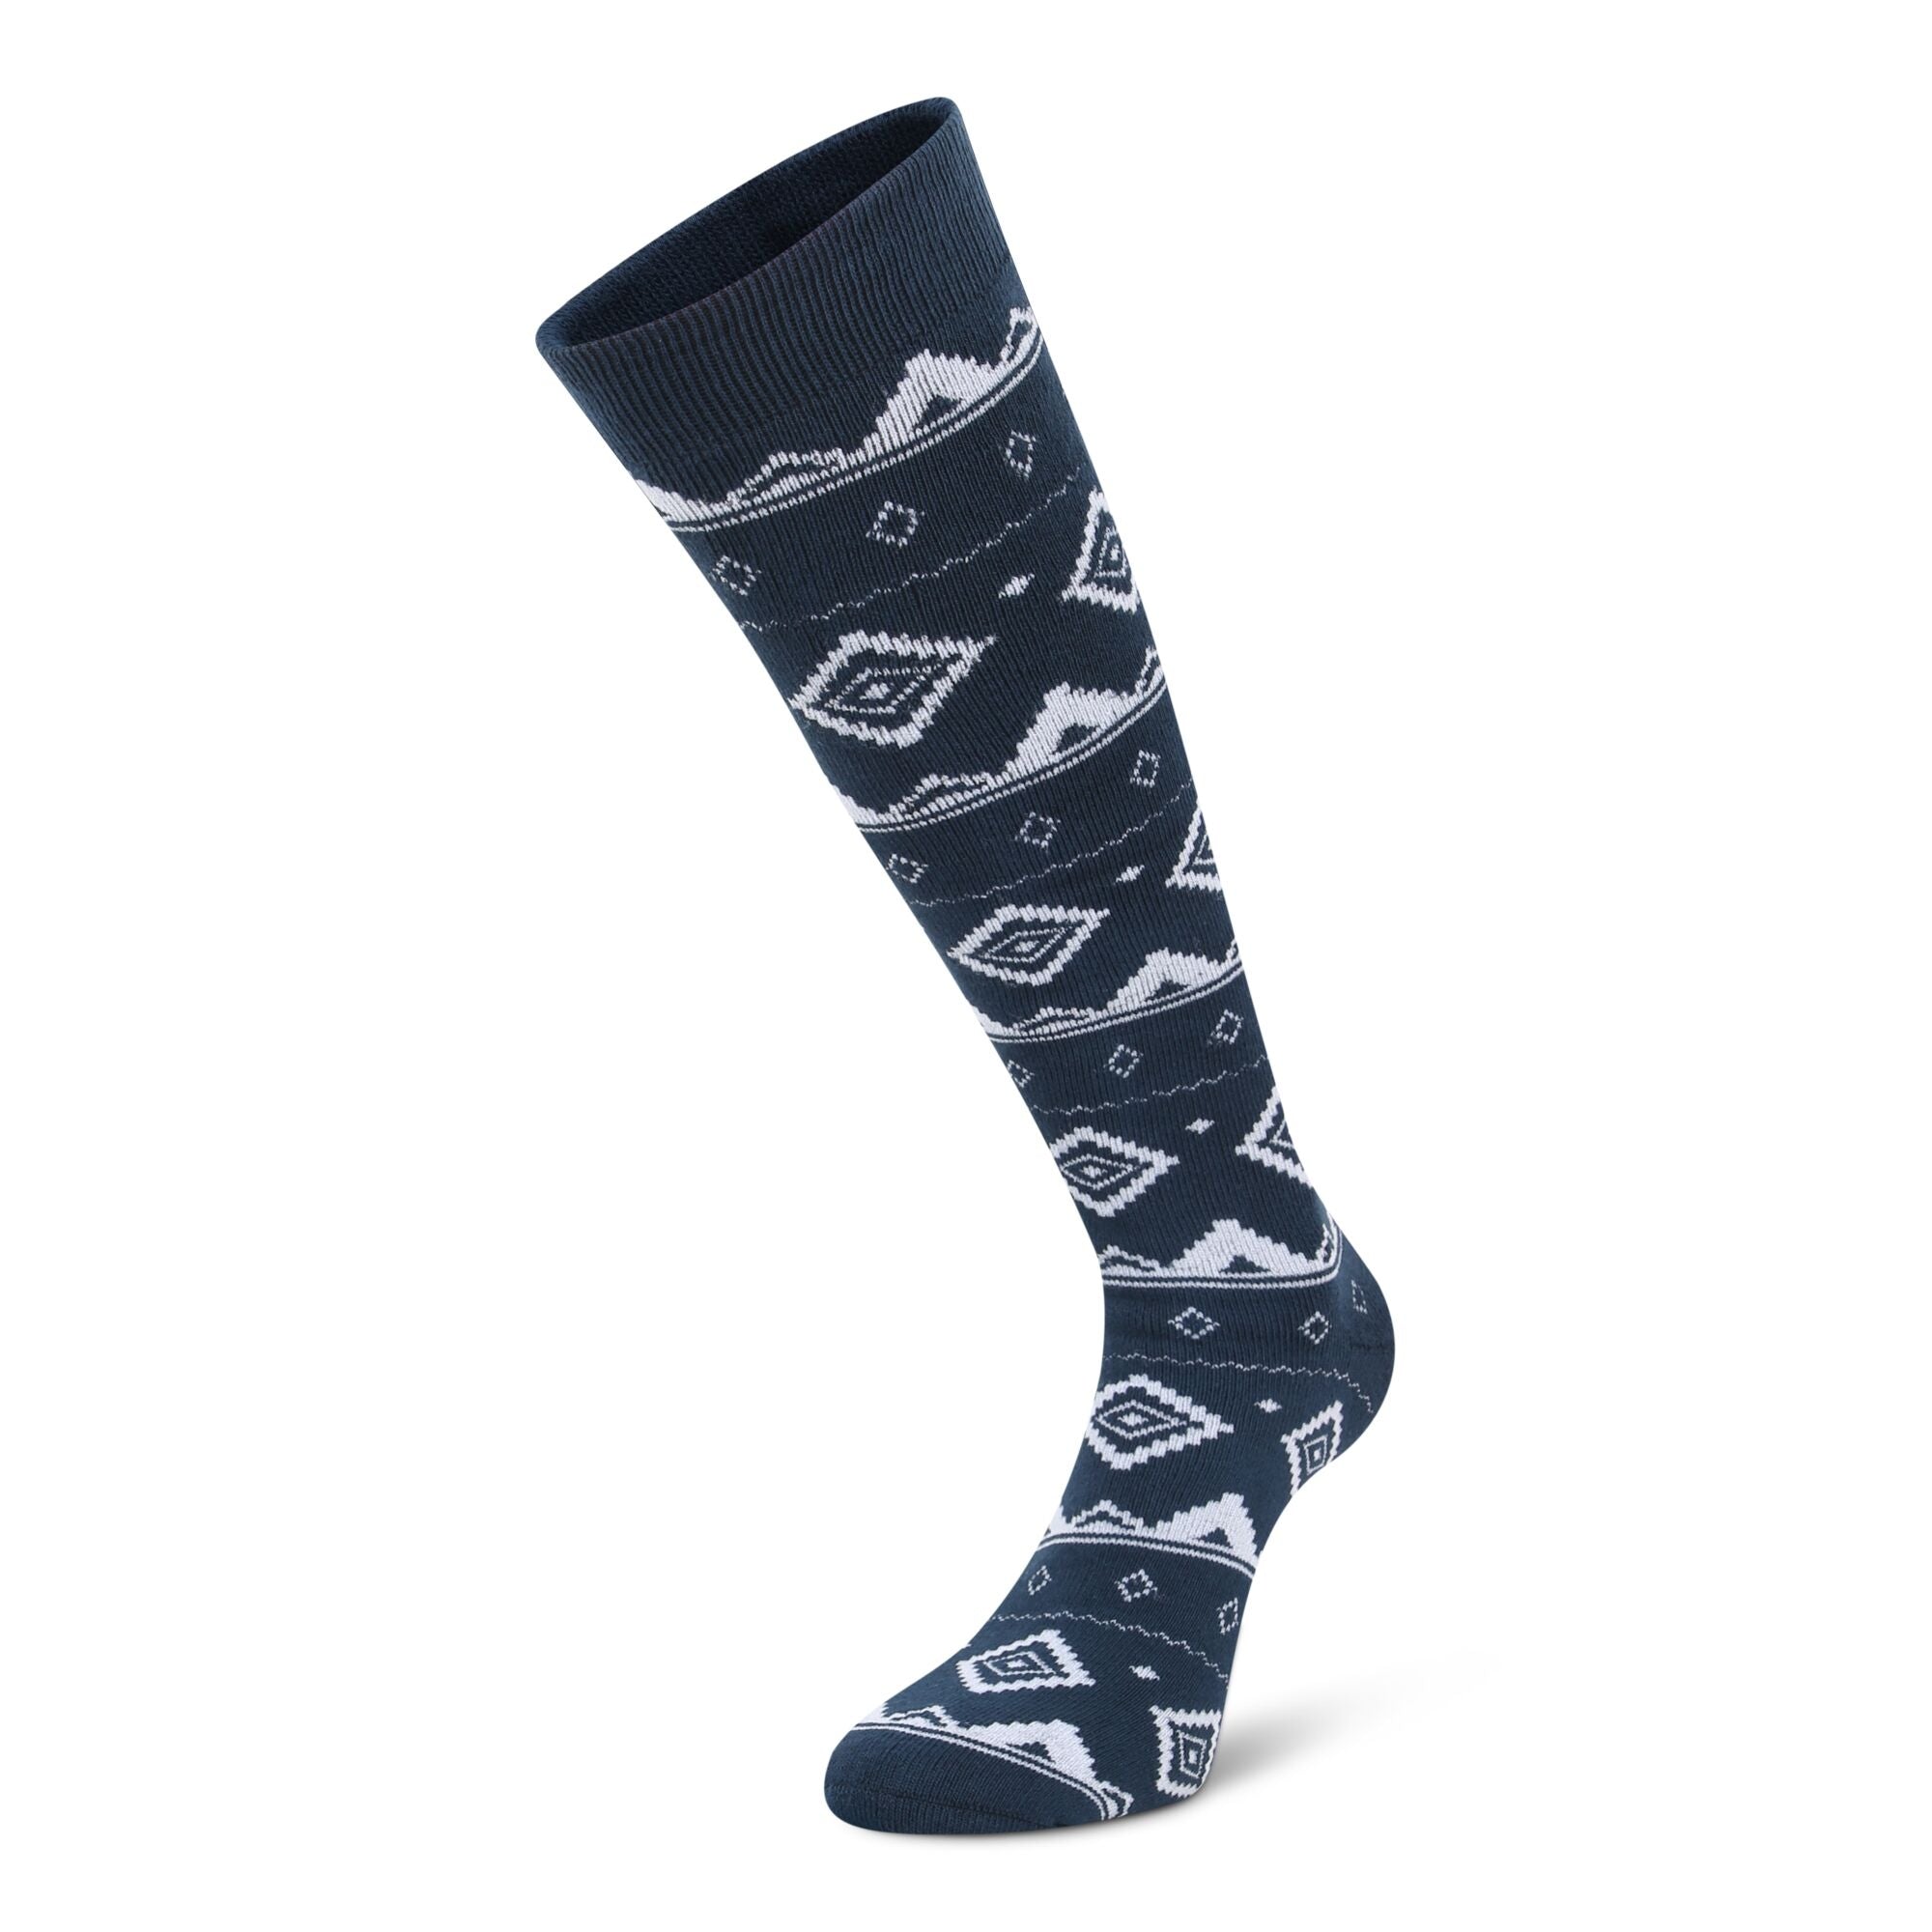 Dare 2 Be Mens Printed Ski Socks